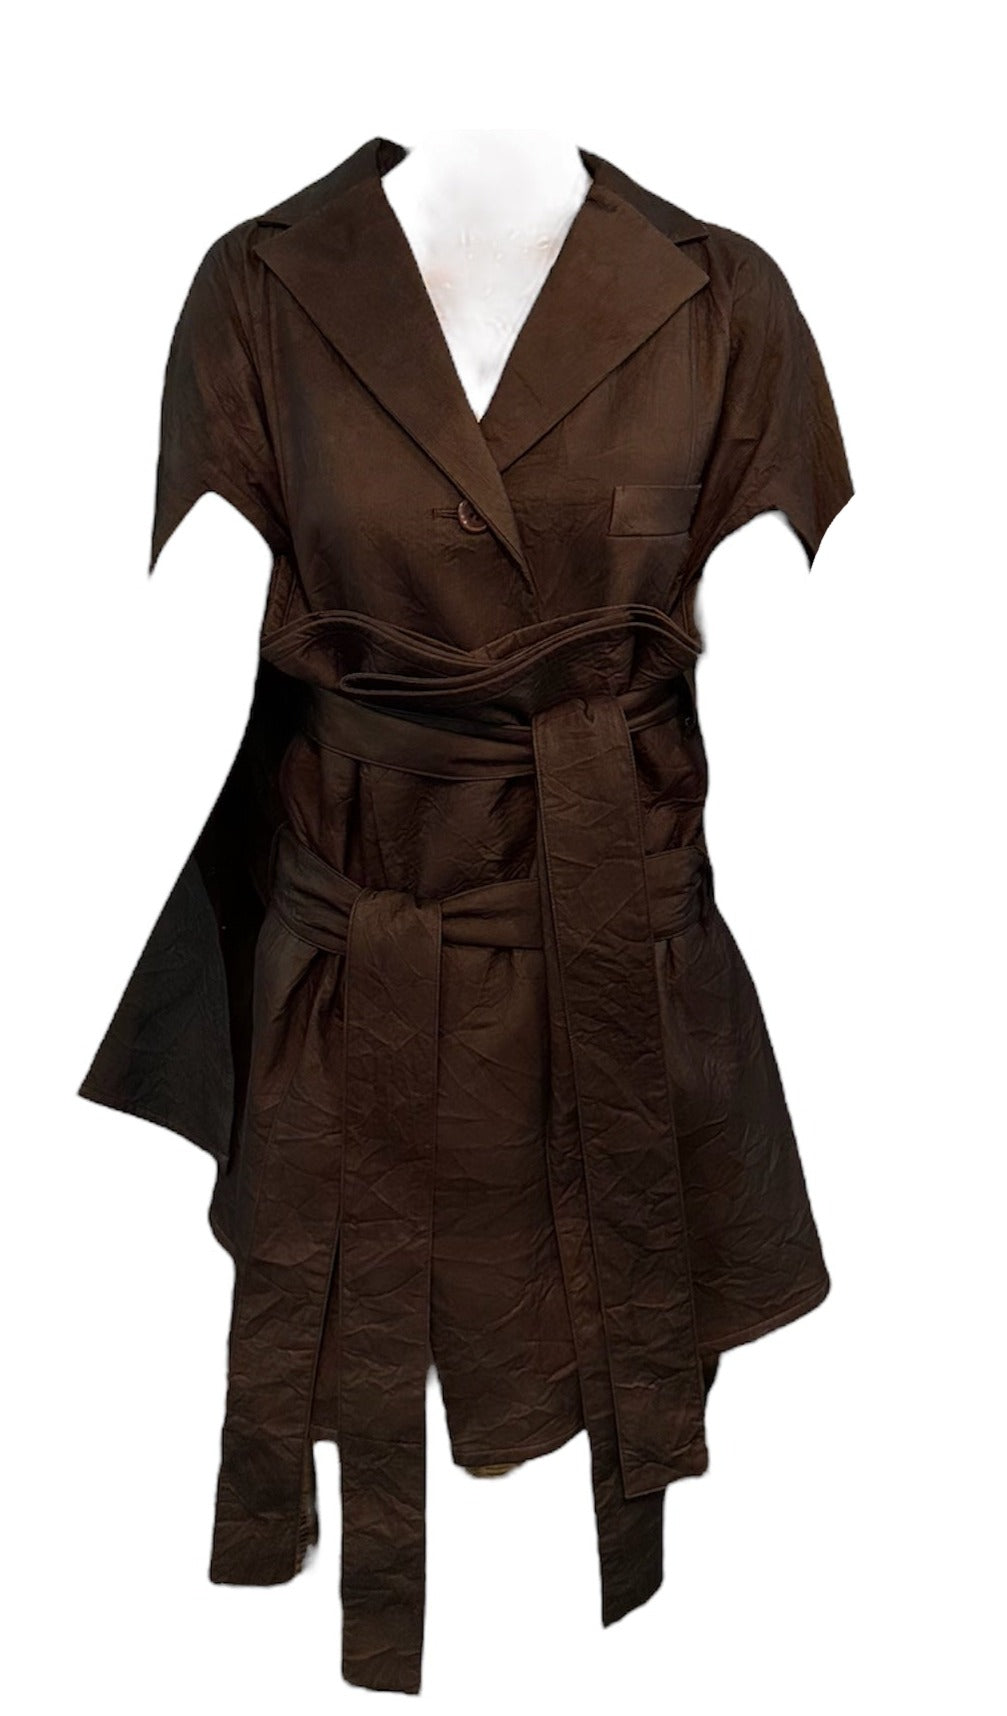  Issey Miyake 90s Iridescent Brown Oversized Obi Waist Pantsuit JACKET CLOSED 6 of 11